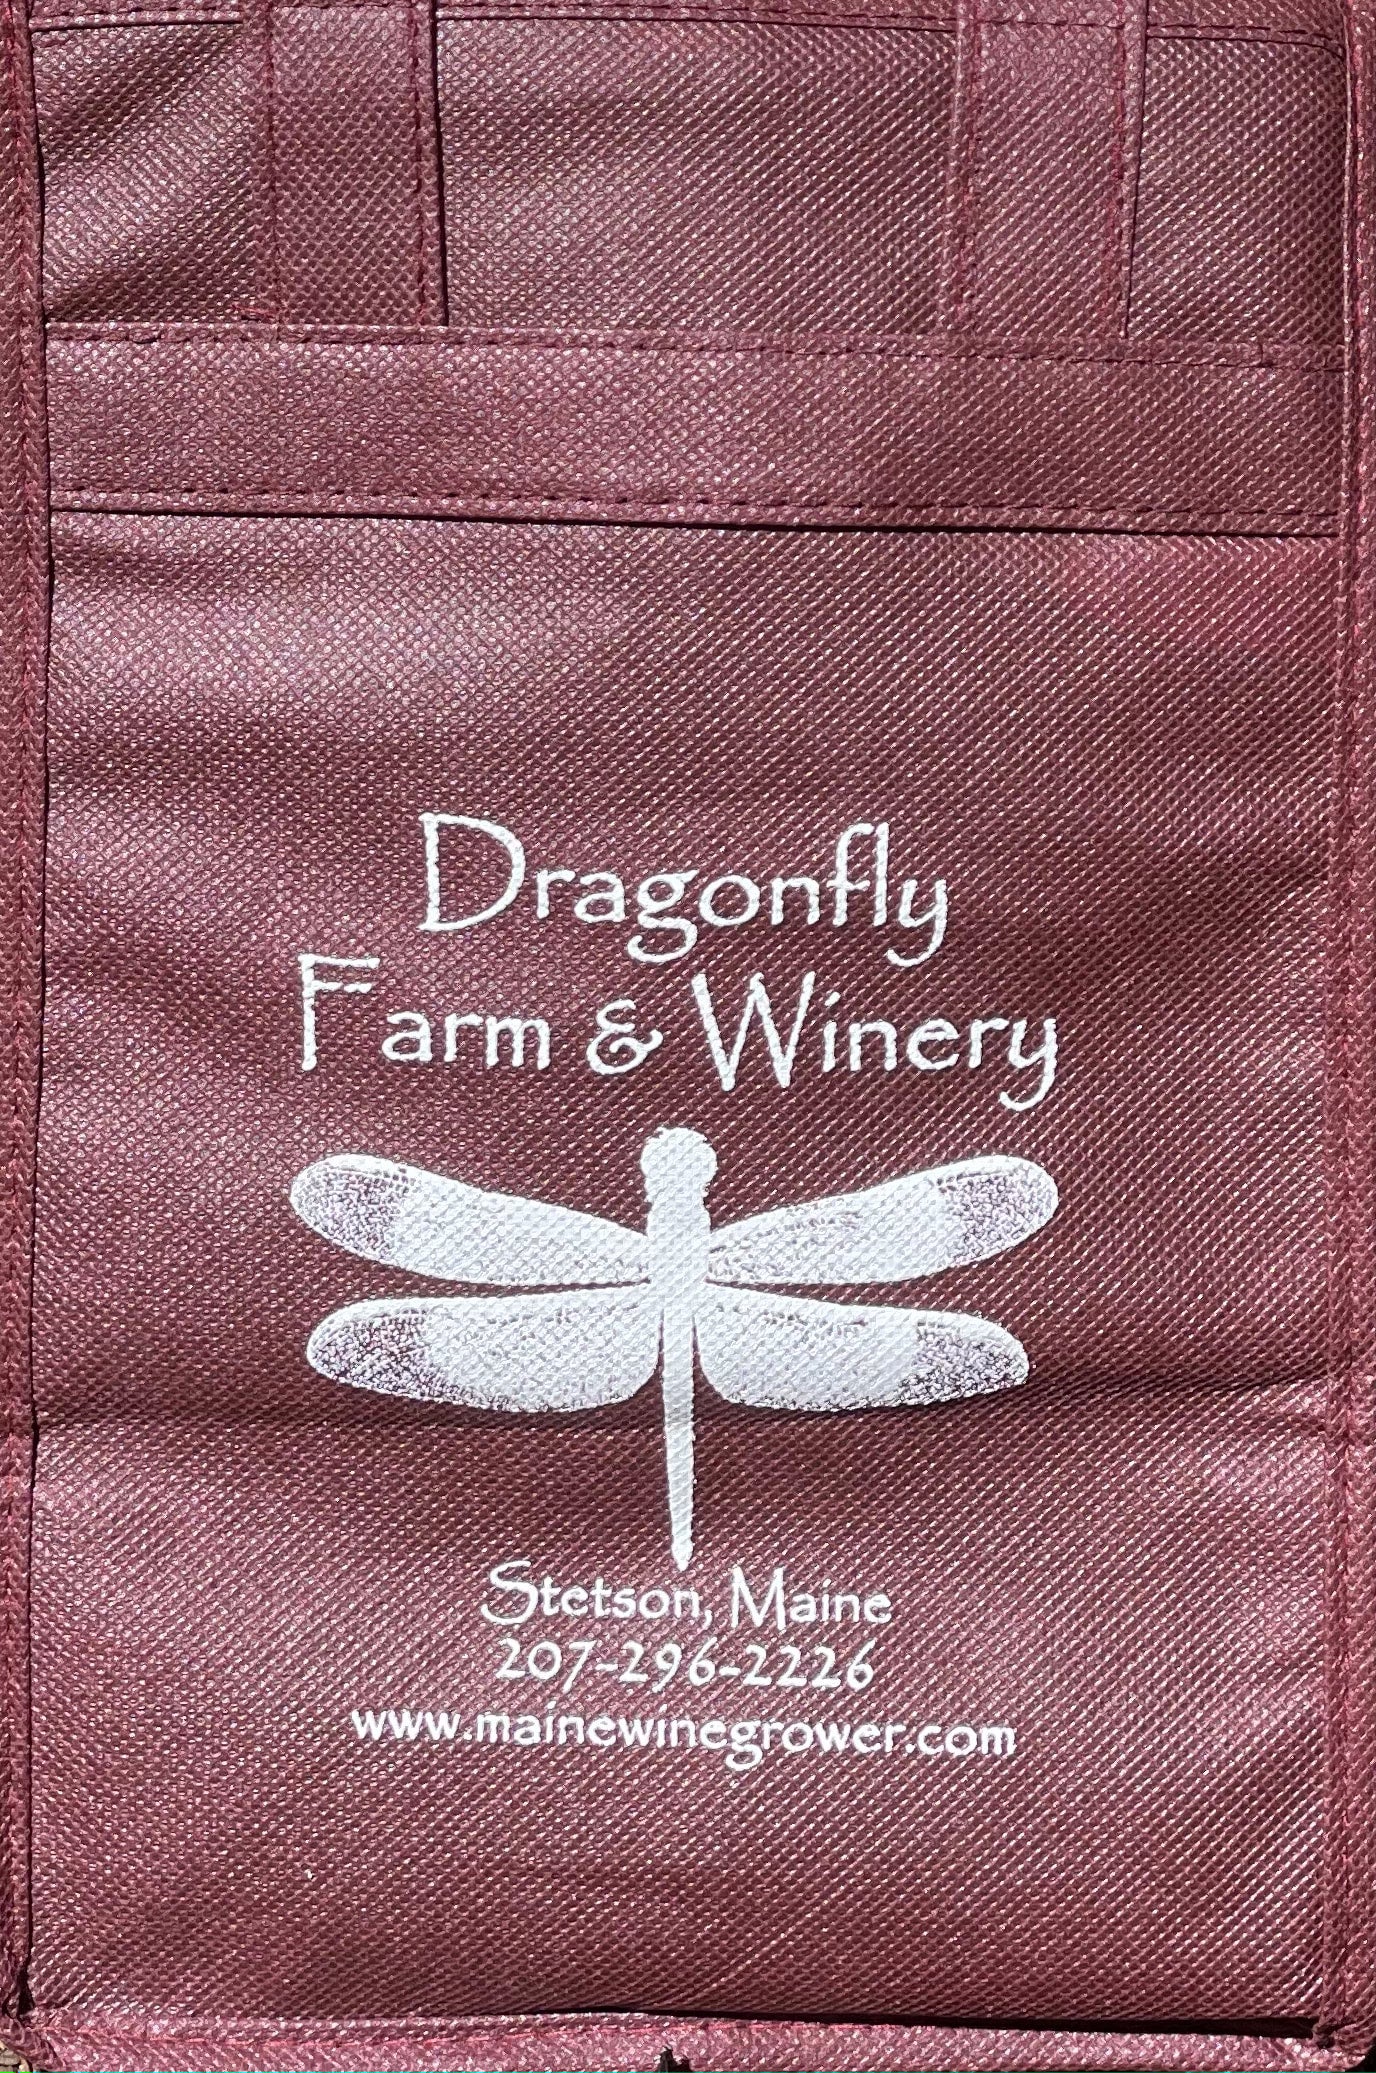 YETI WINE TUMBLER  Dragonfly Farm and Winery